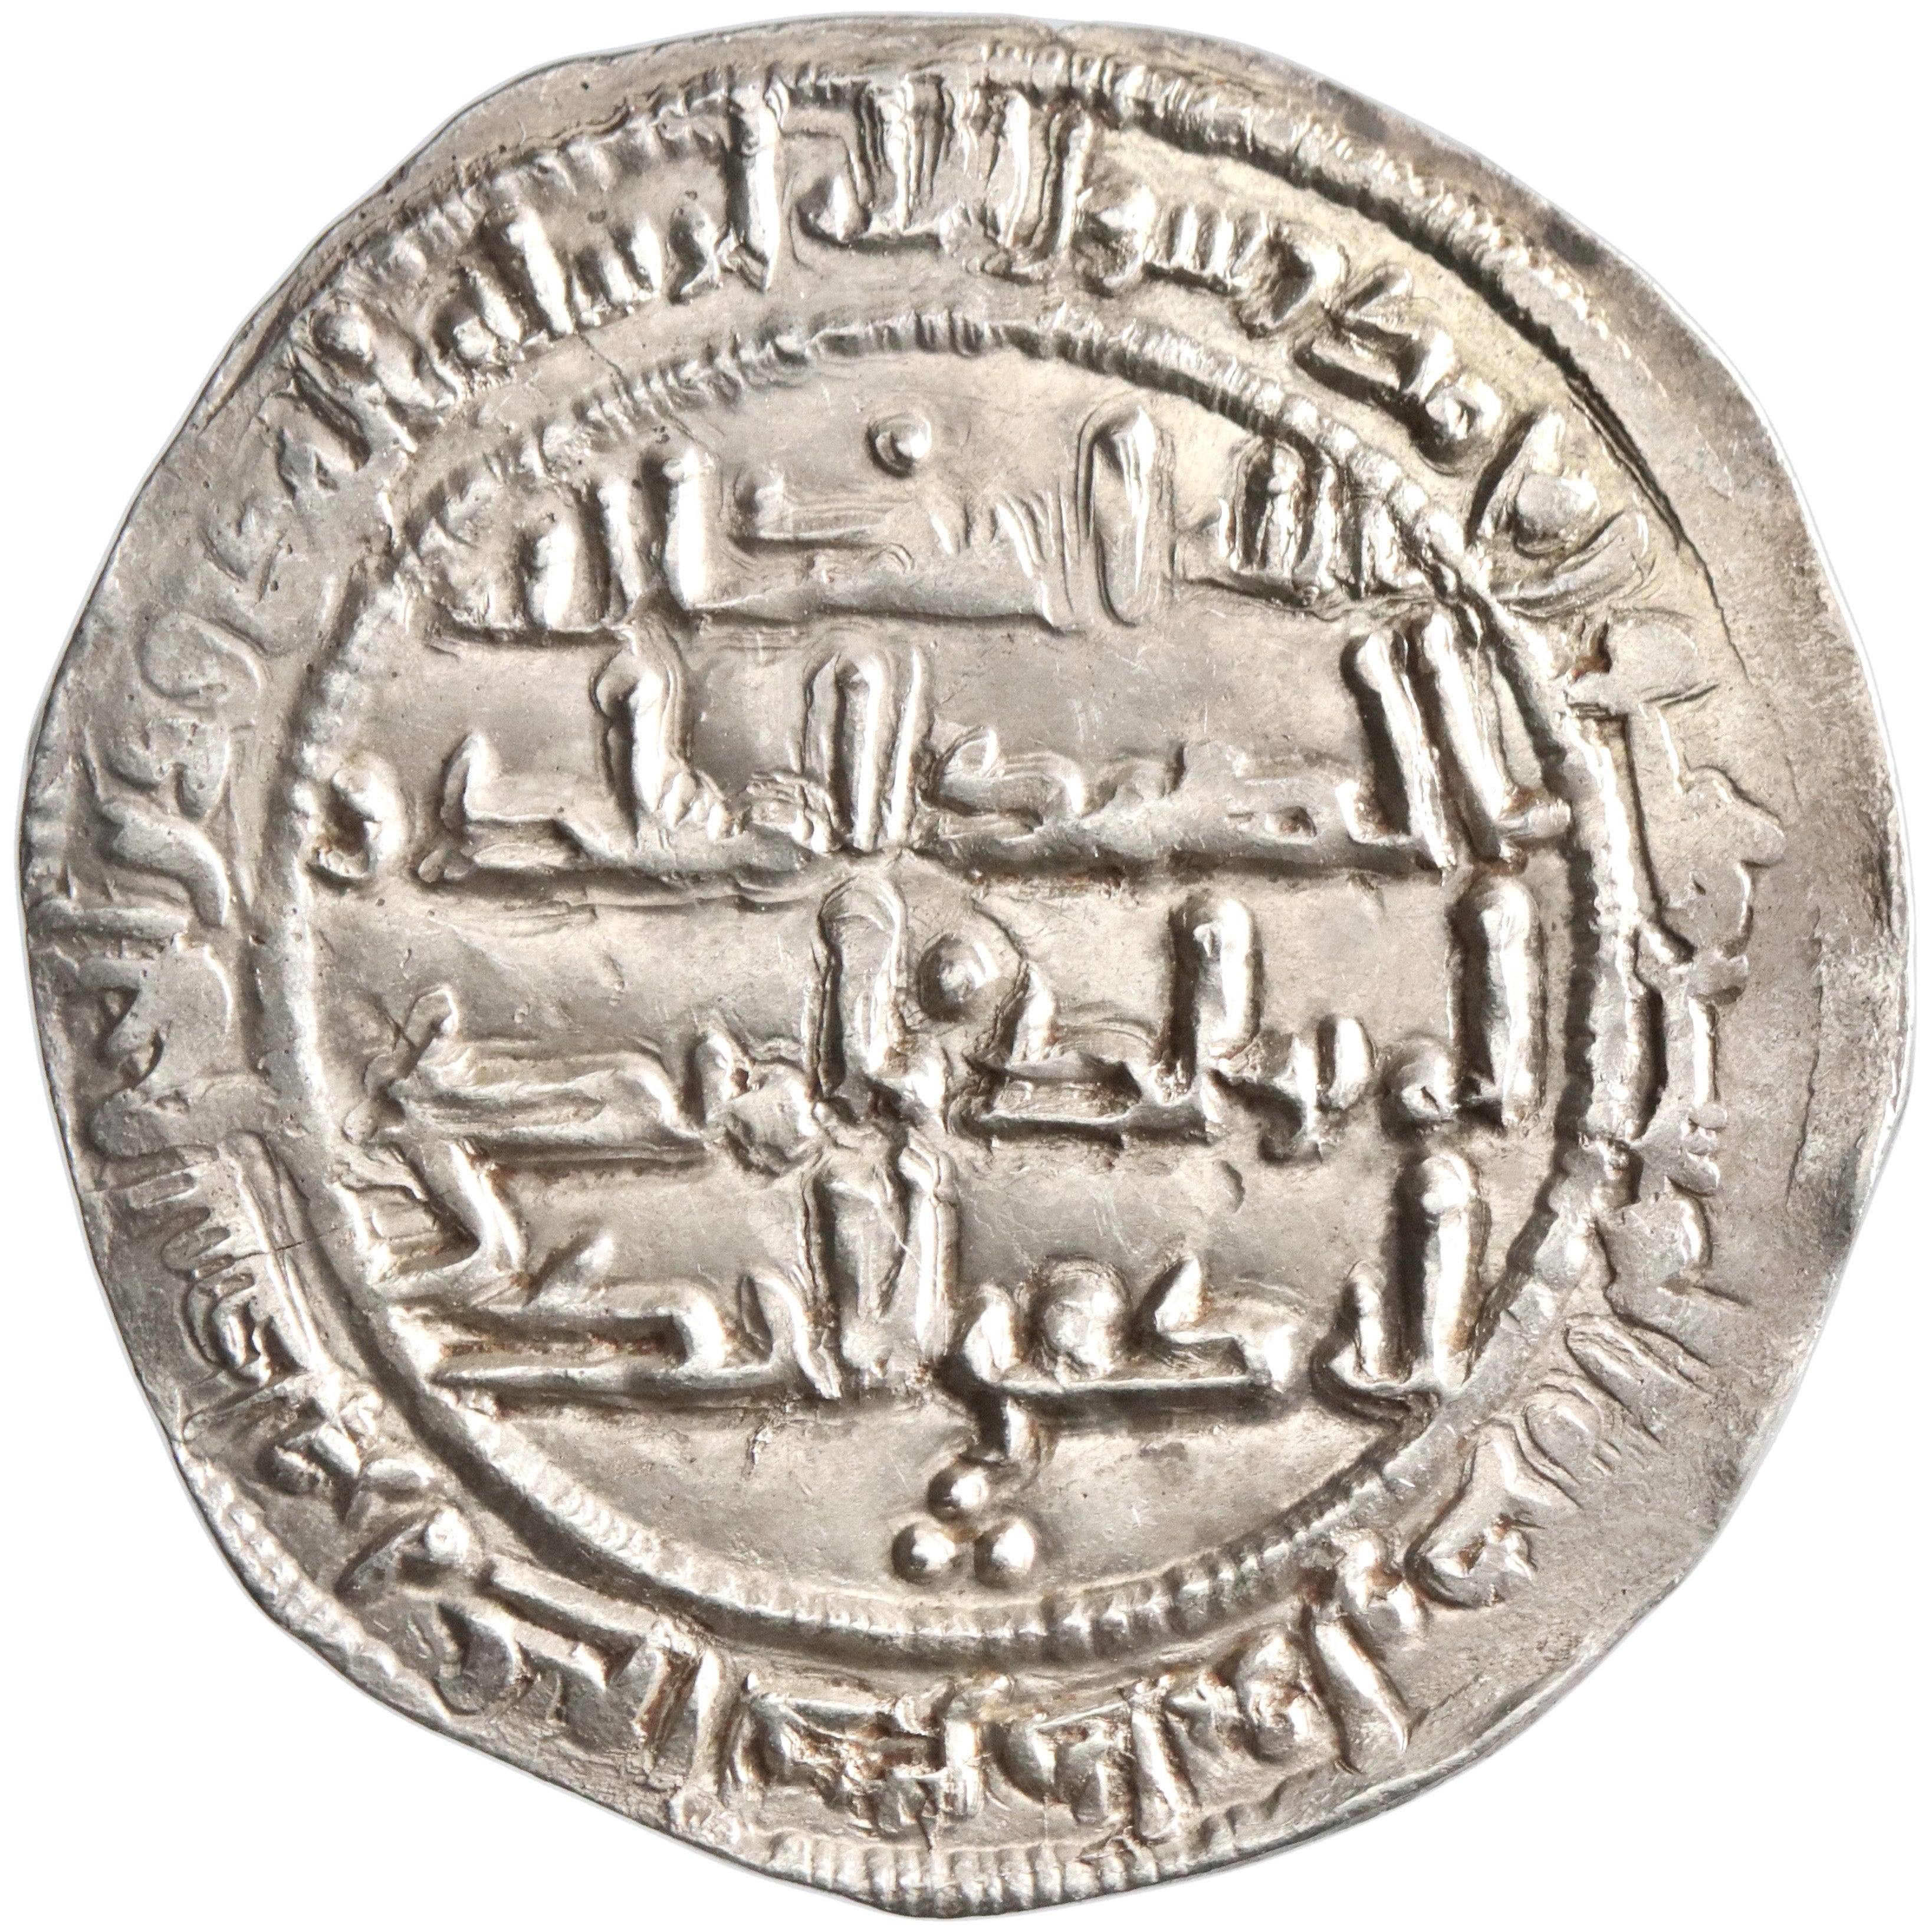 Umayyad of Spain, al-Hakam I, silver dirham, al-Andalus (Spain) mint, AH 196, crescent